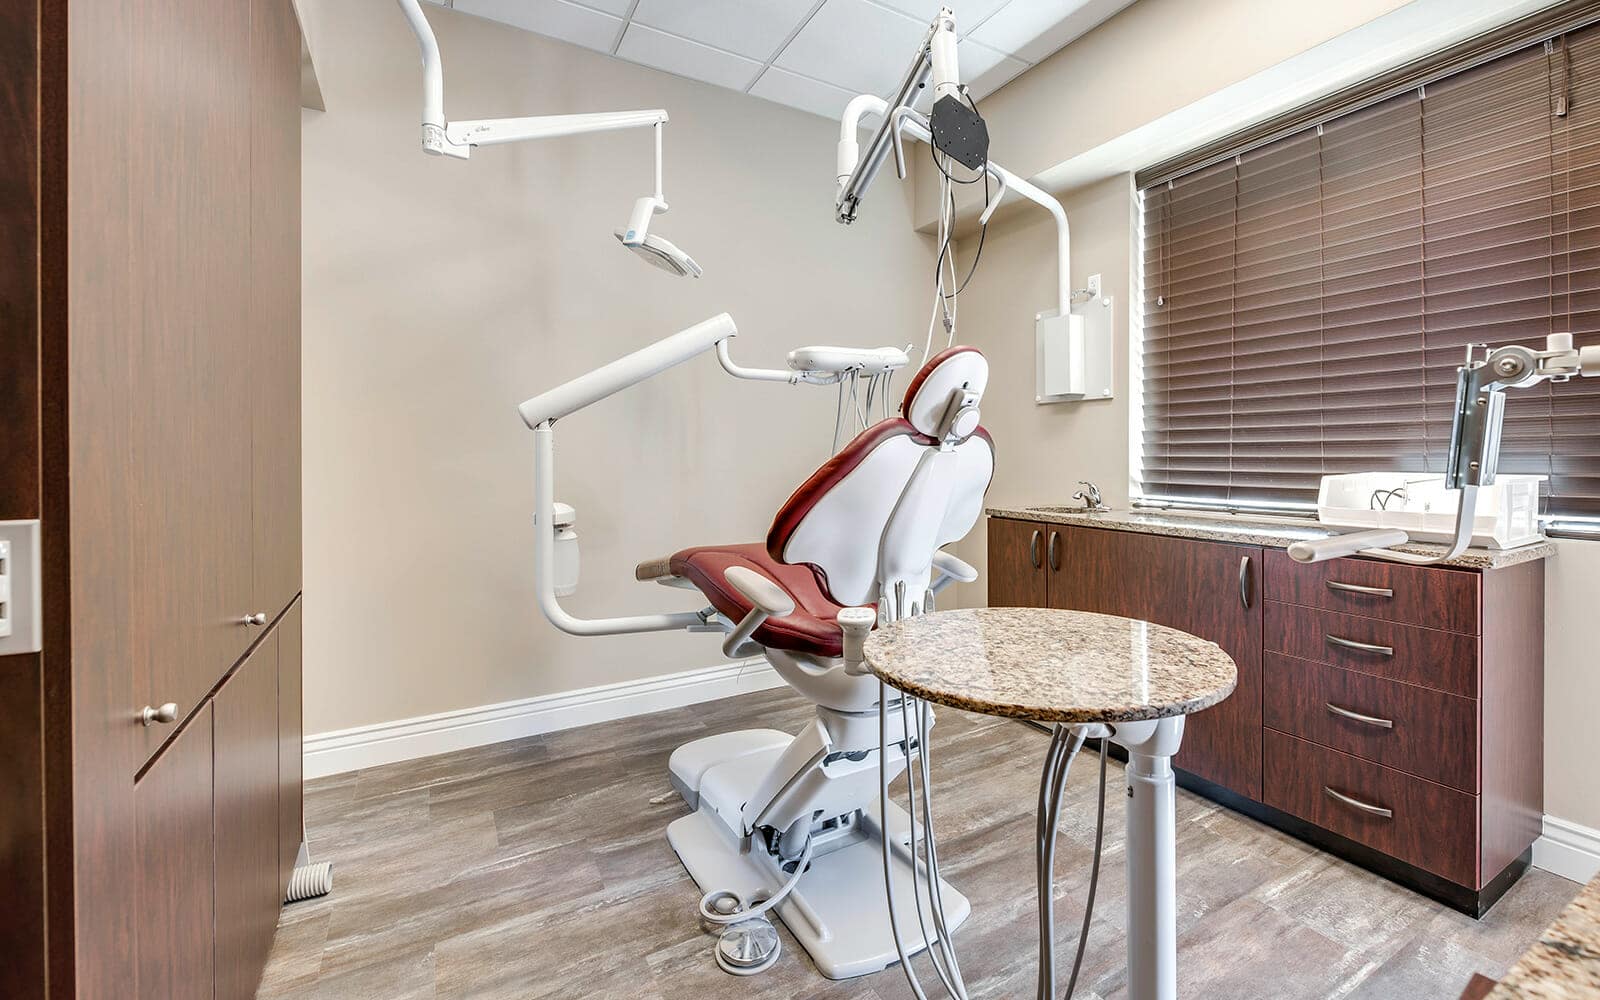 Private Dental Space Renovation